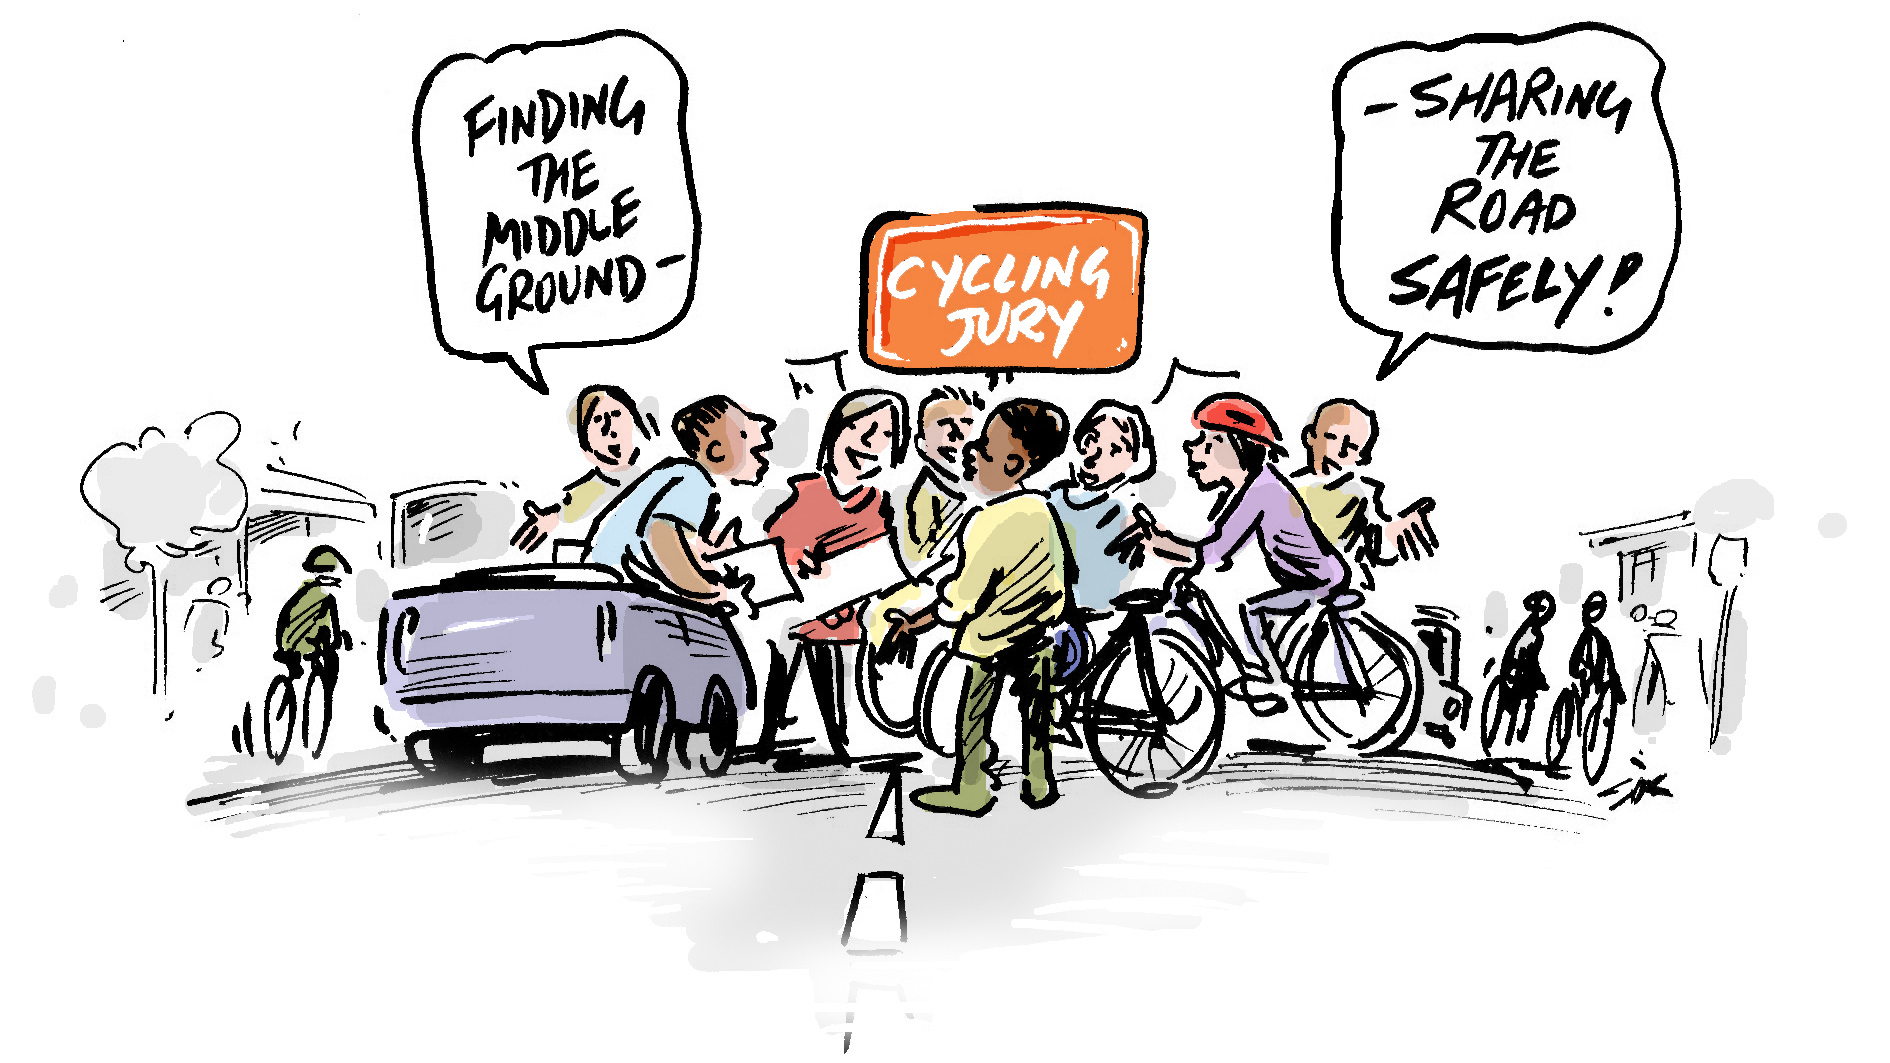 Cycling Jury colour pic